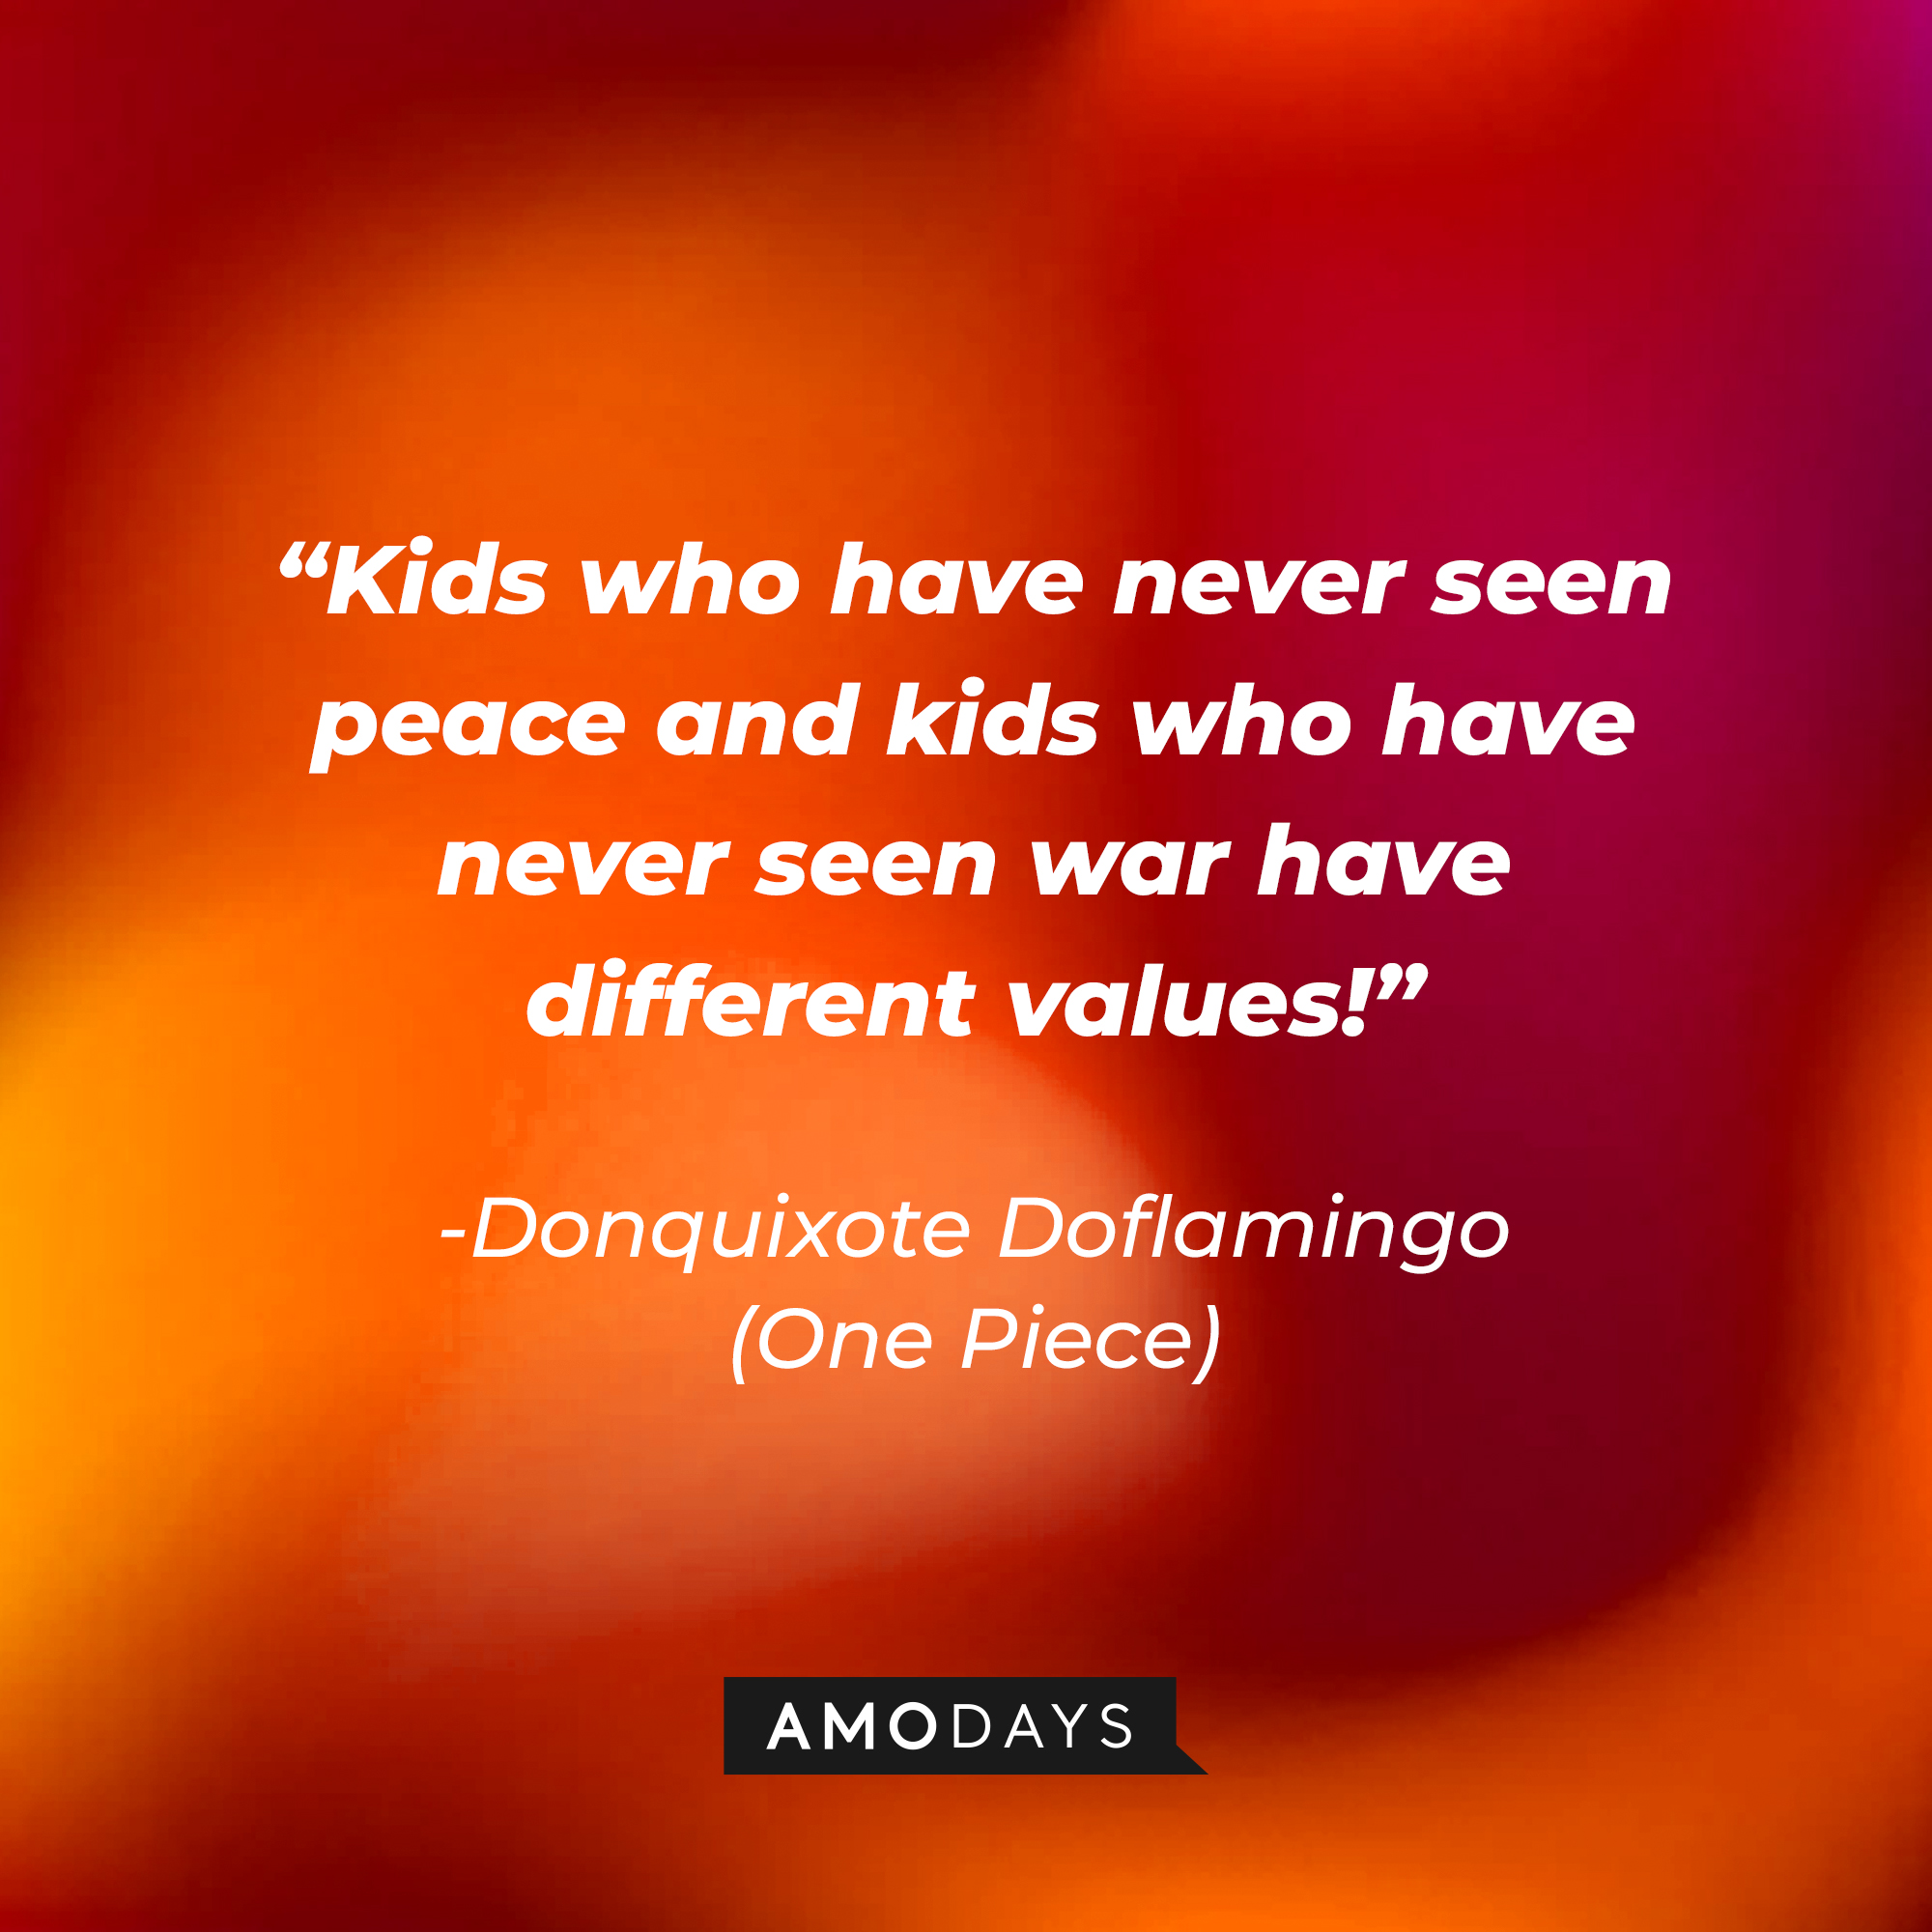 Donquixote Doflamingo's quote: “Kids who have never seen peace and kids who have never seen war have different values!” | Source:Amodays